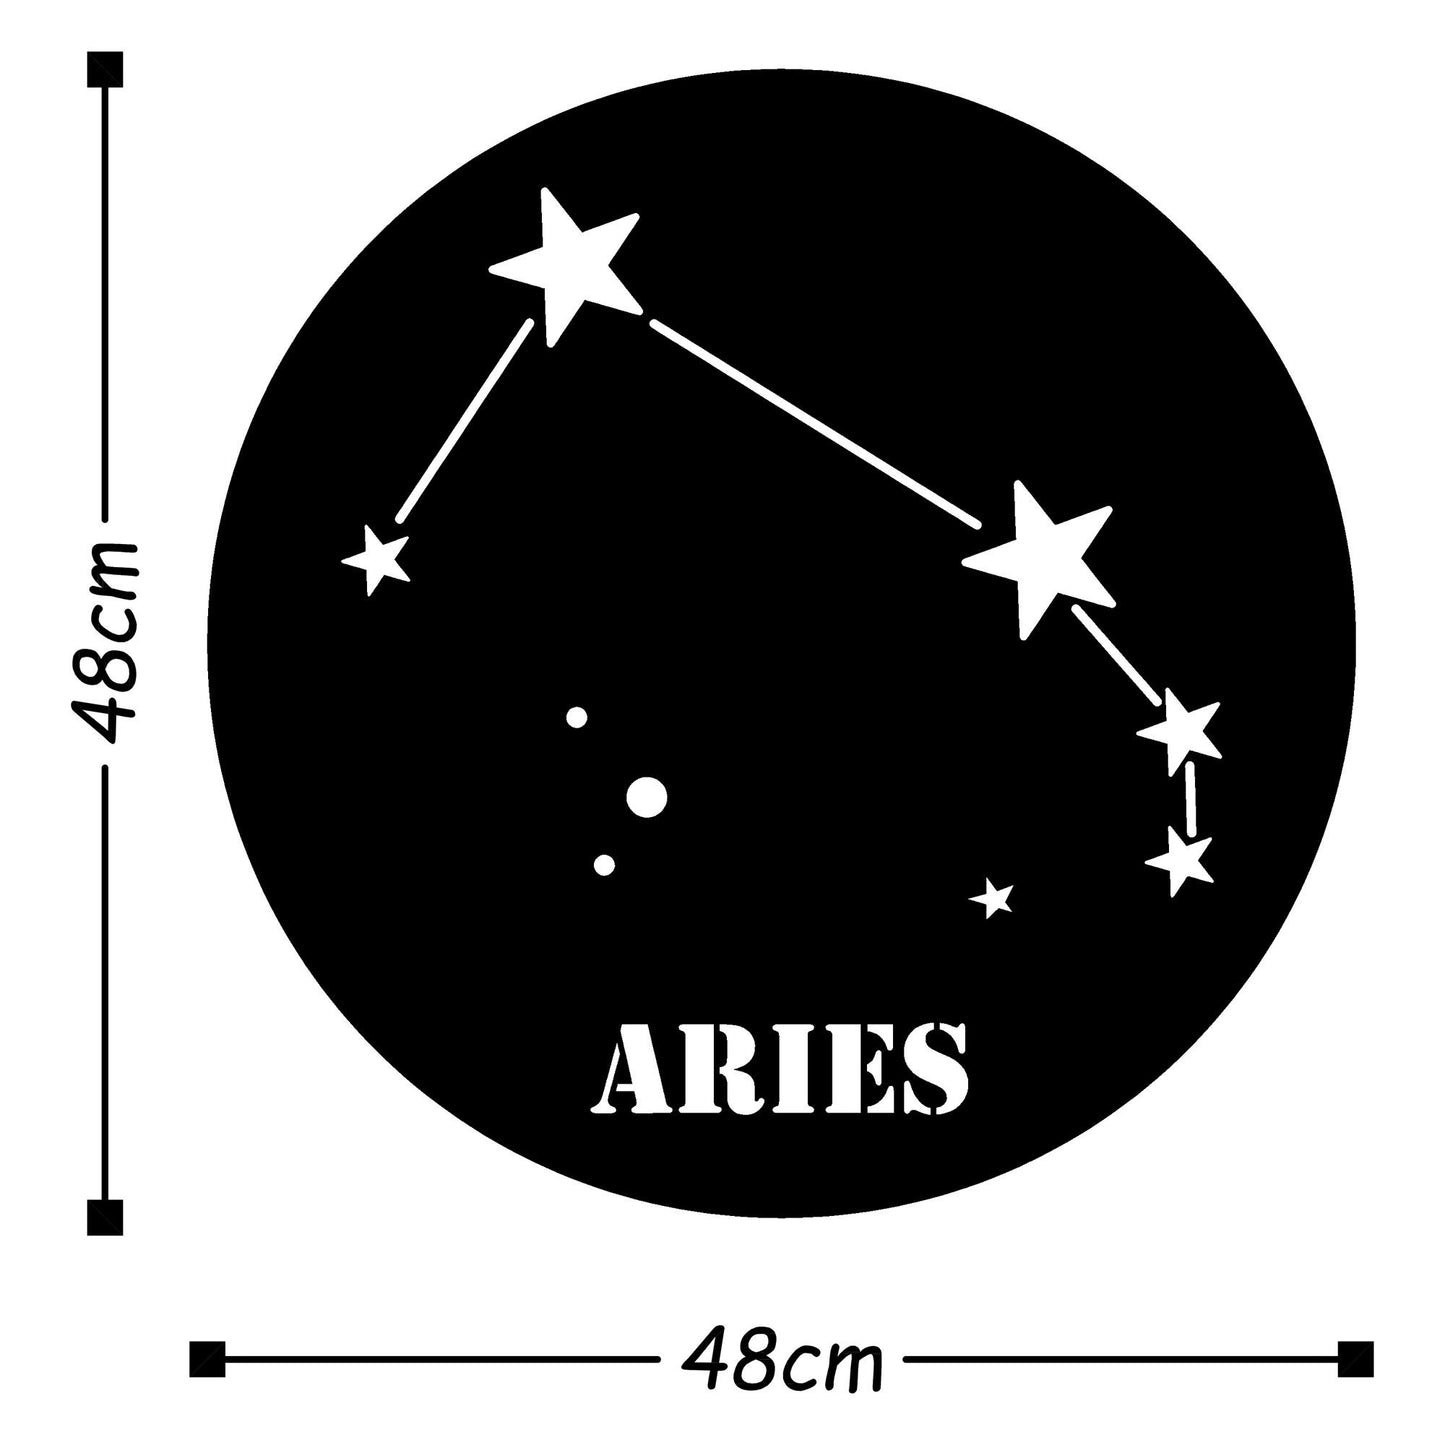 Aries Horoscope - Black - Decorative Metal Wall Accessory